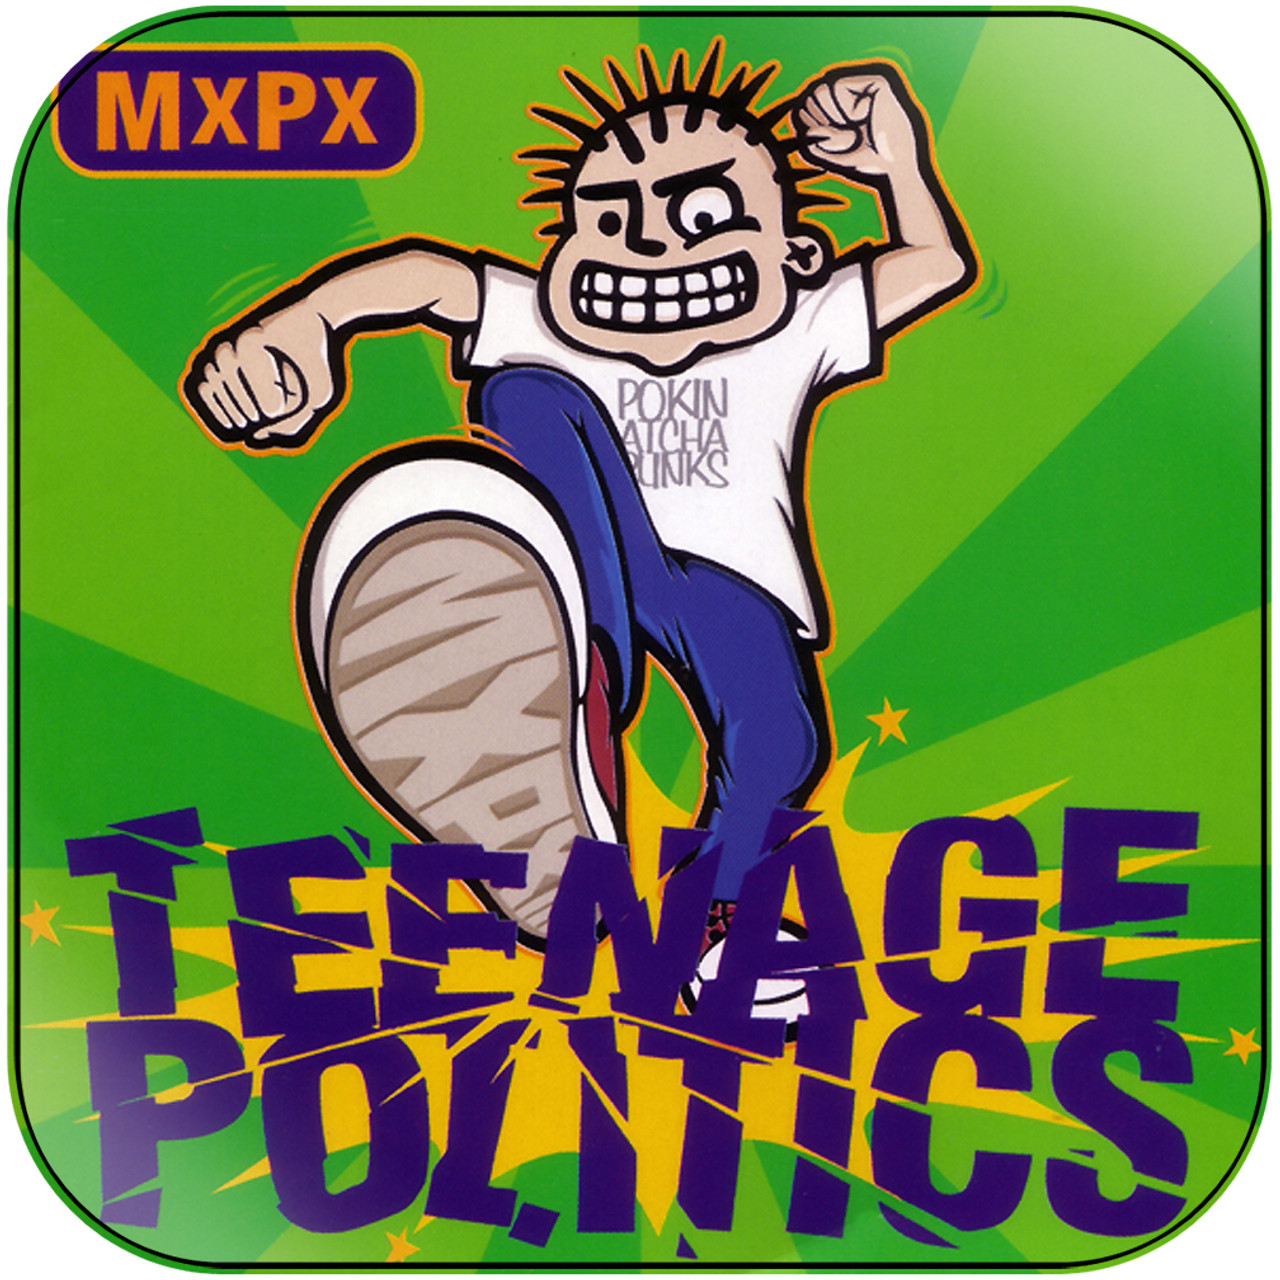 MxPx - Teenage Politics Album Cover Sticker